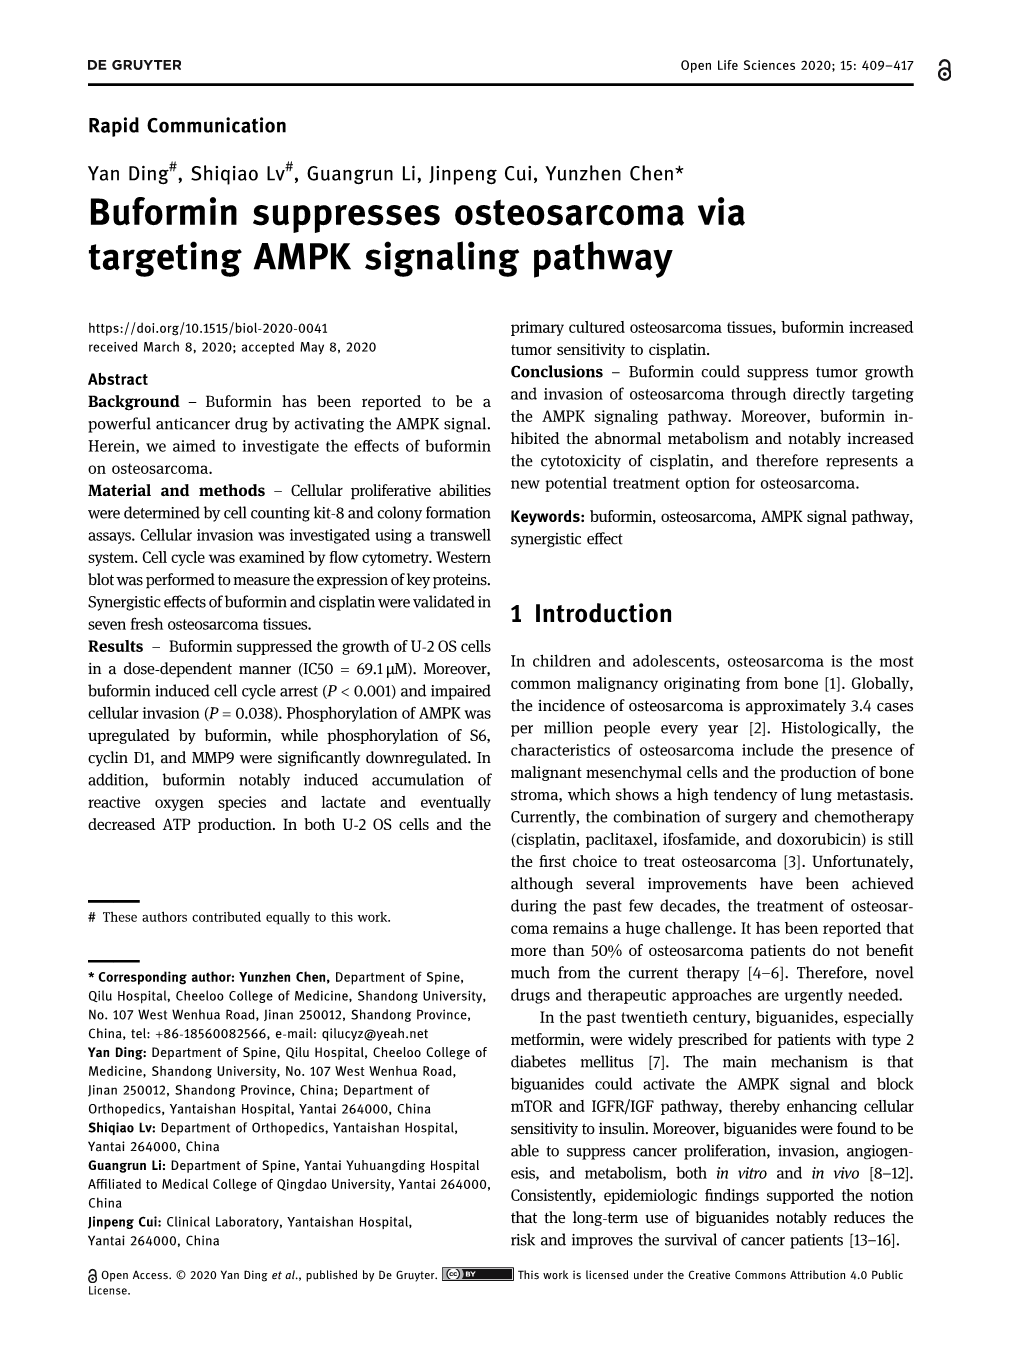 Buformin Suppresses Osteosarcoma Via Targeting AMPK Signaling Pathway